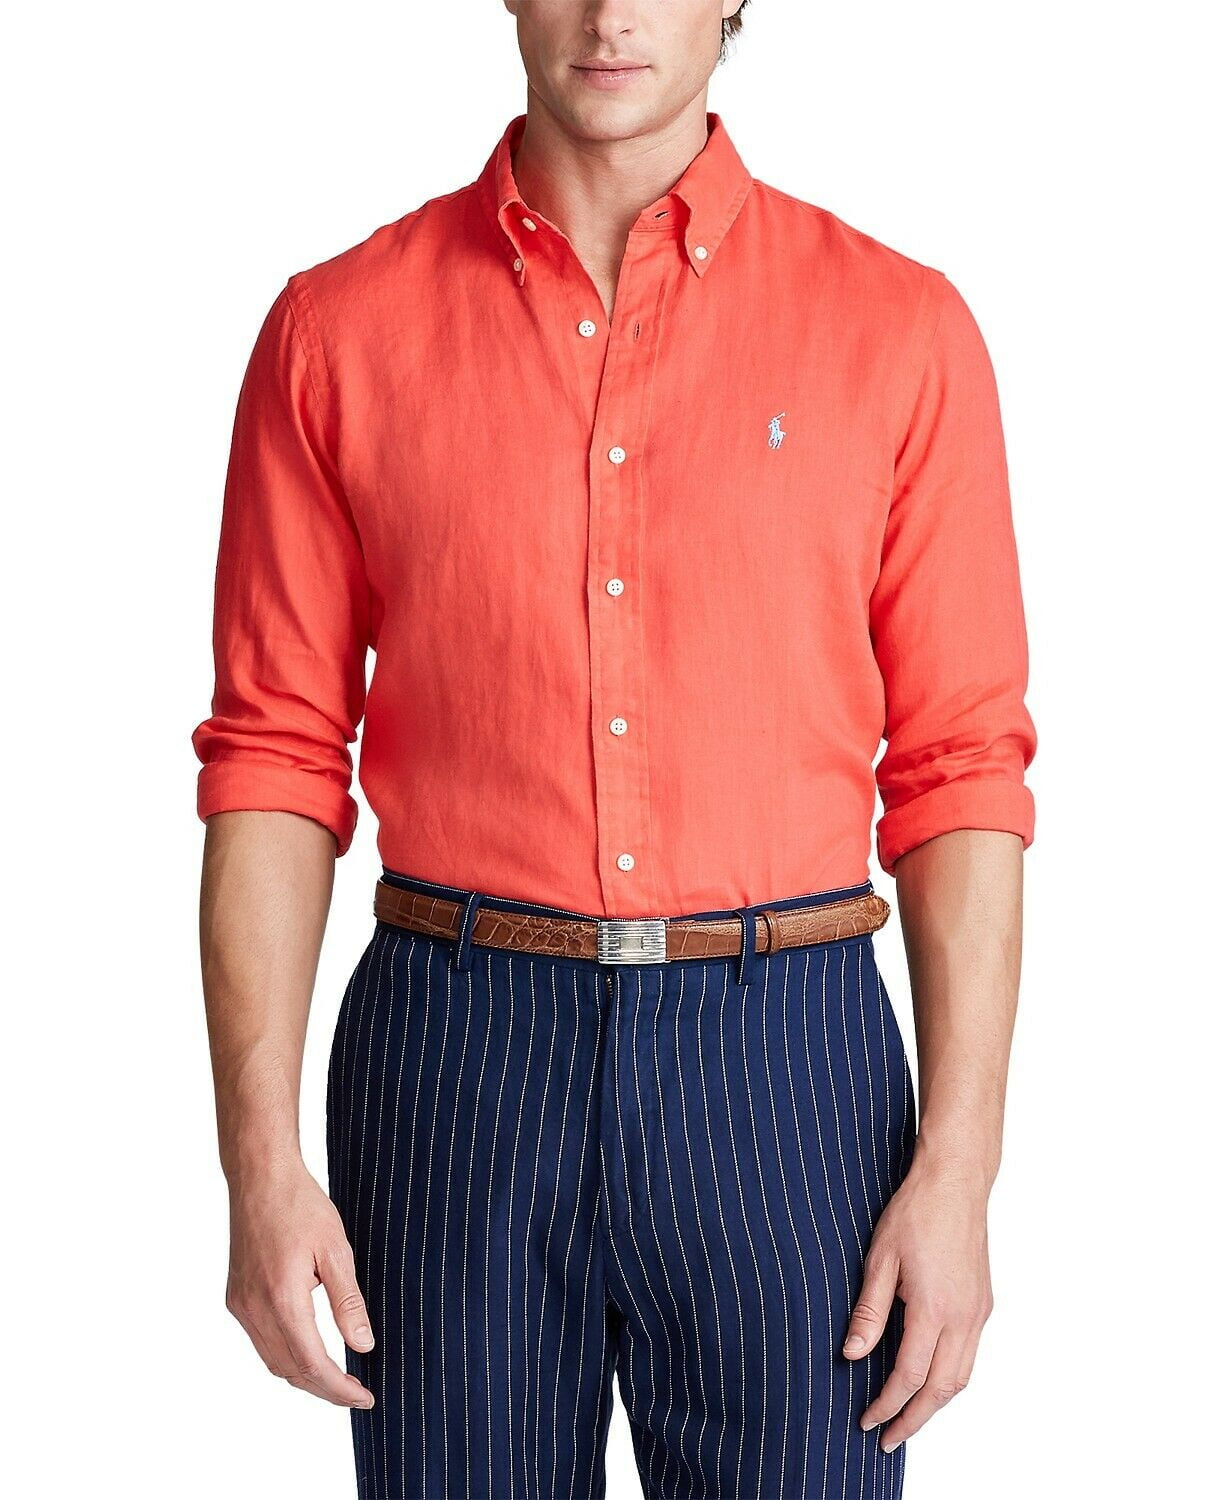 Polo Ralph Lauren Men's Classic Fit Linen Shirt Red Size S 